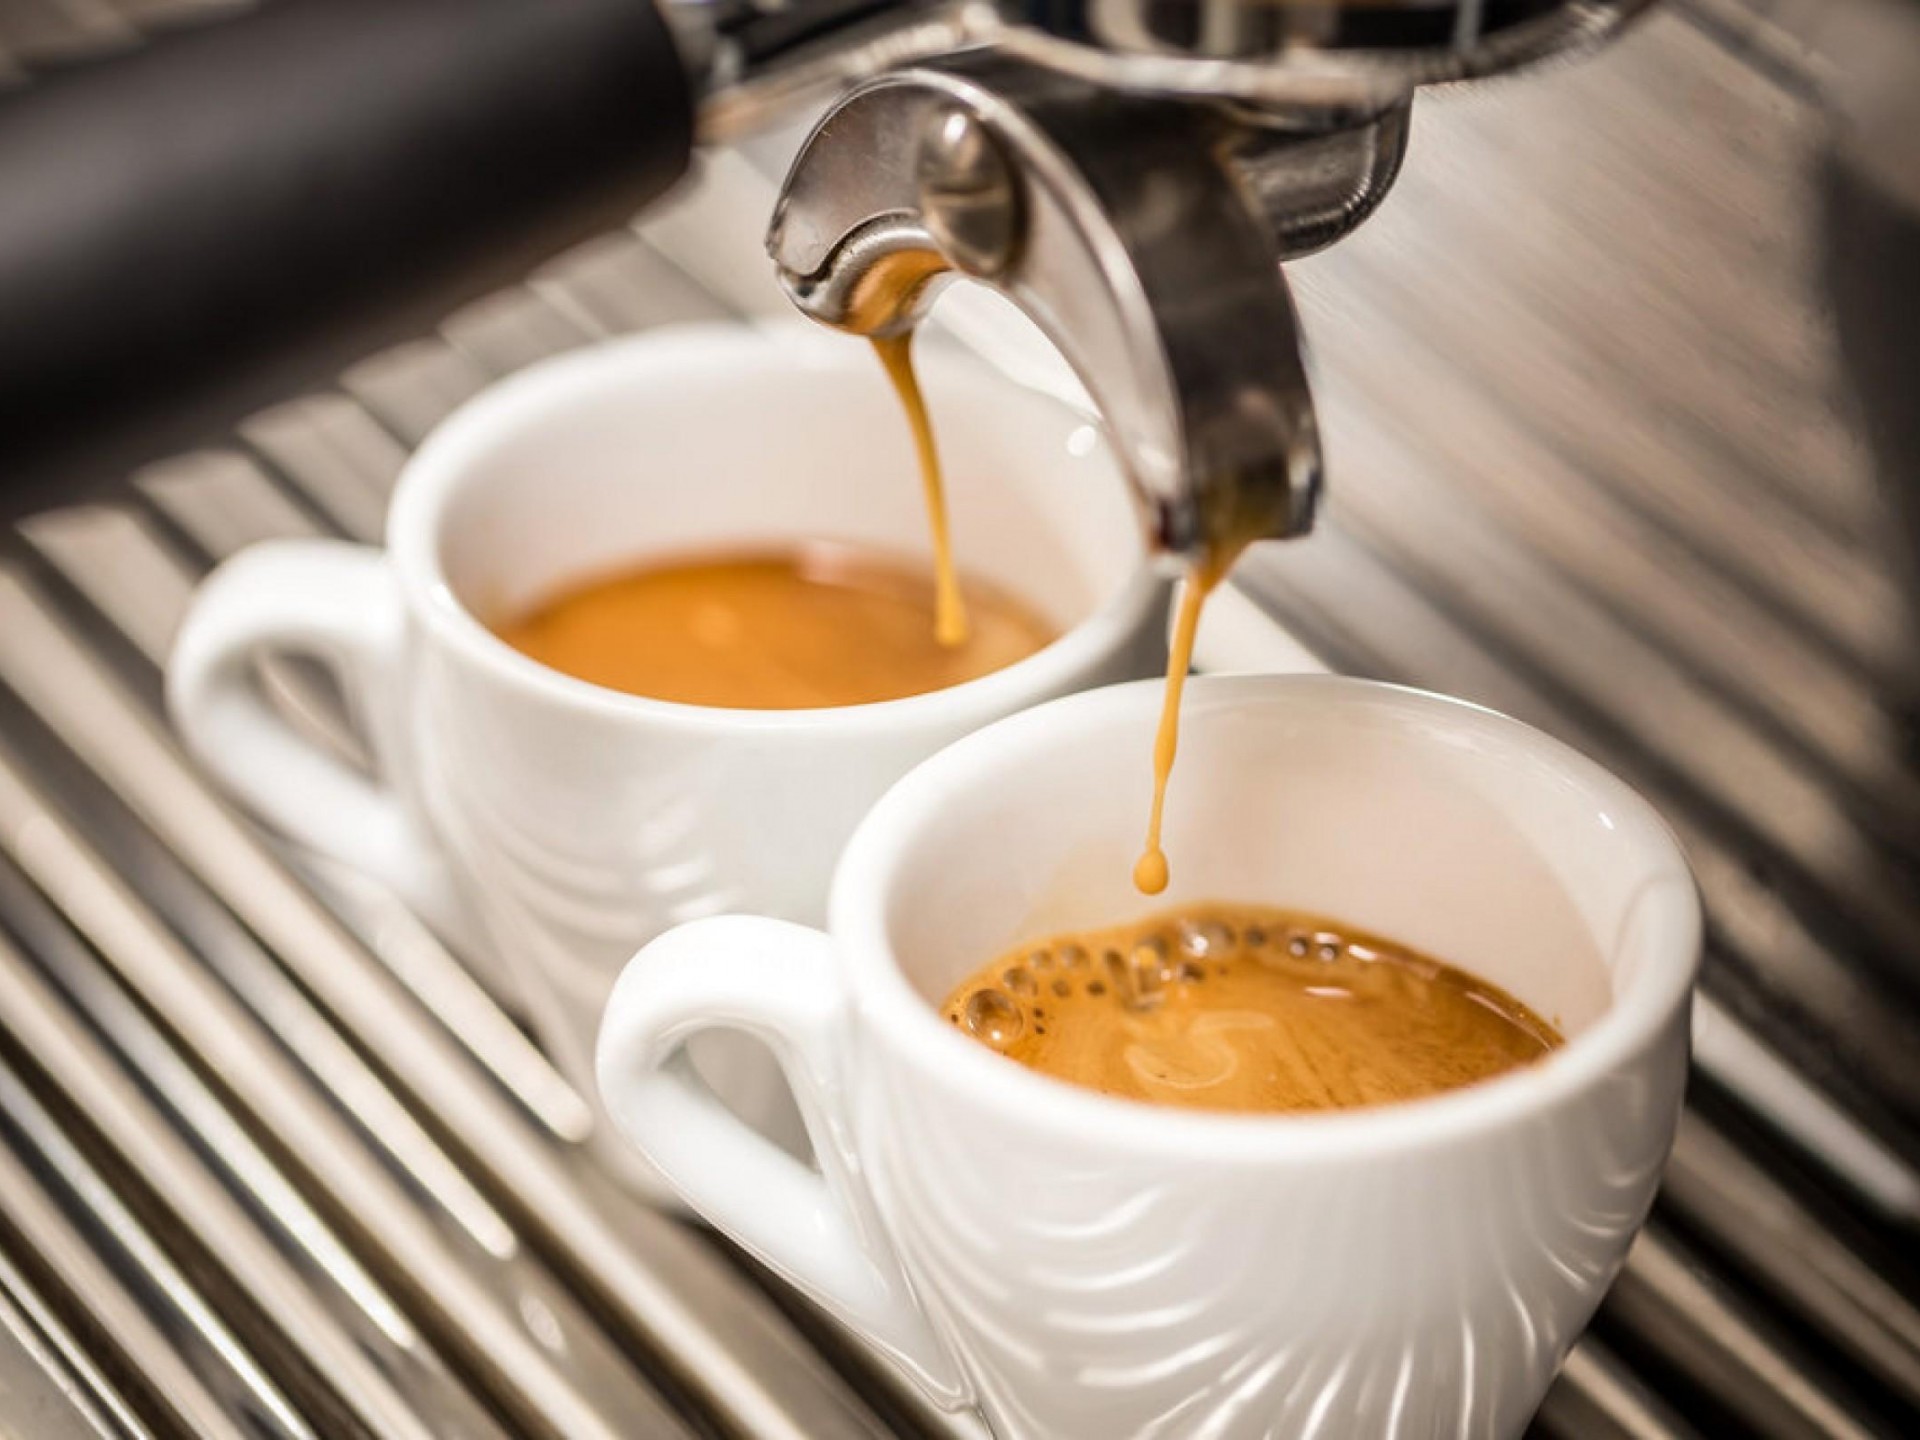 FRANCHISE CAFE  OWNER NETS OVER $100k  SOUTH...Business For Sale